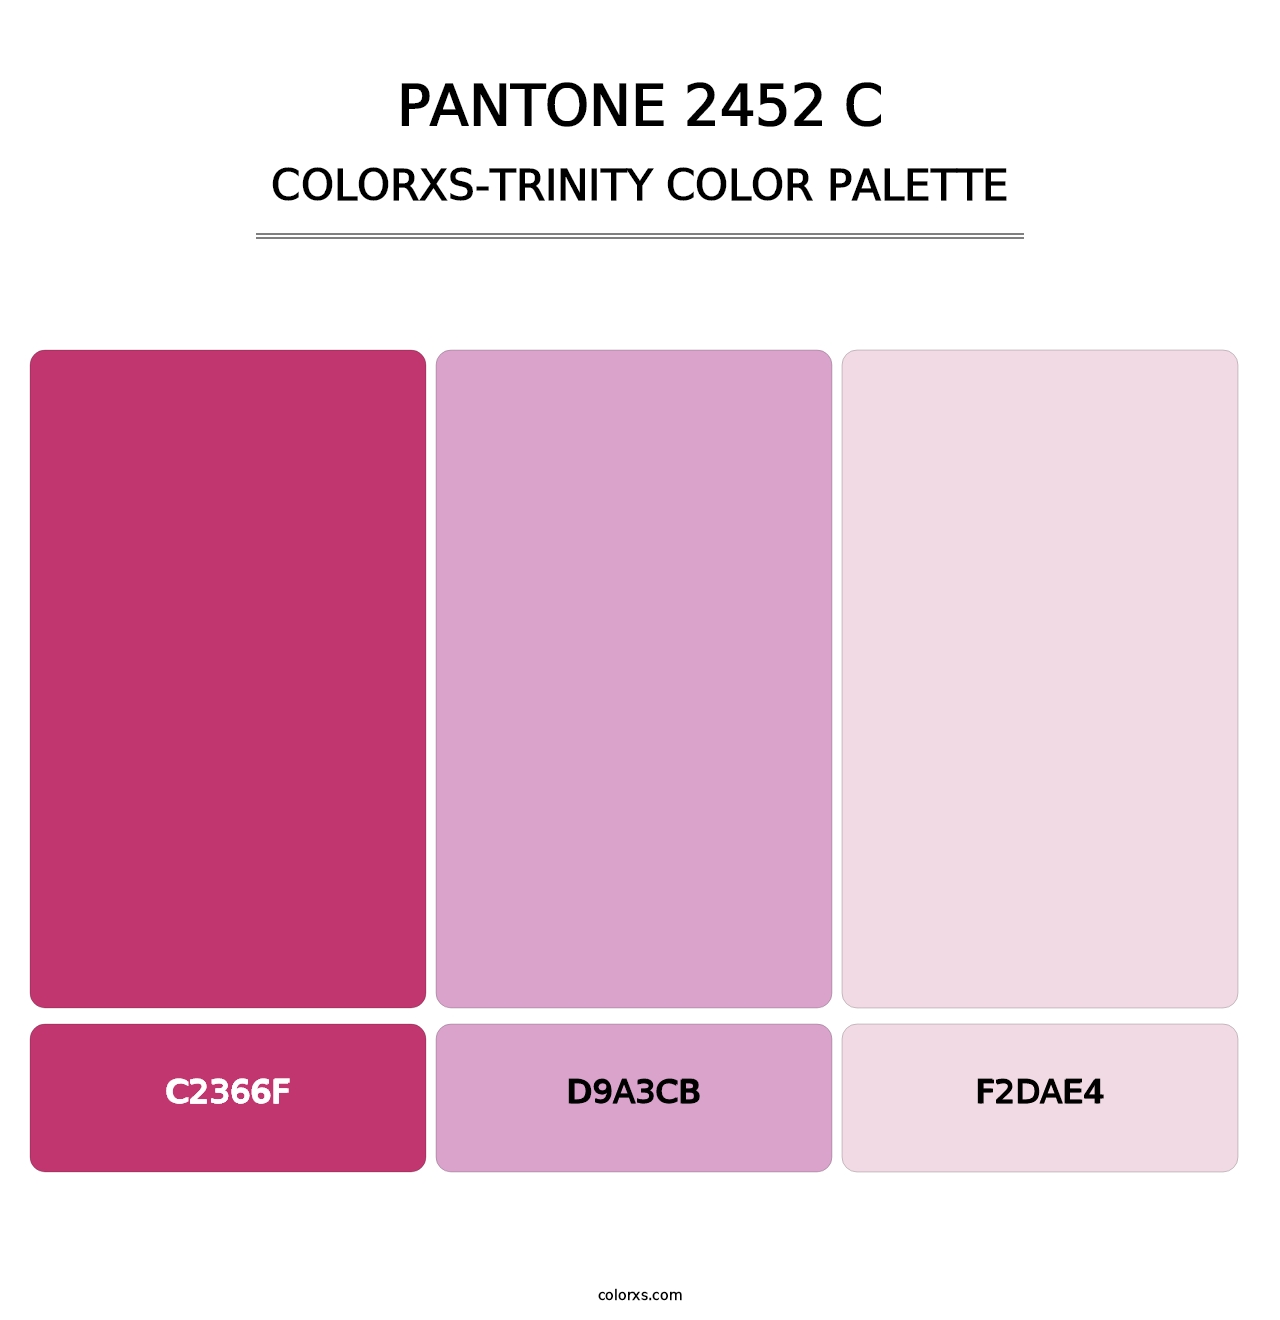 PANTONE 2452 C - Colorxs Trinity Palette